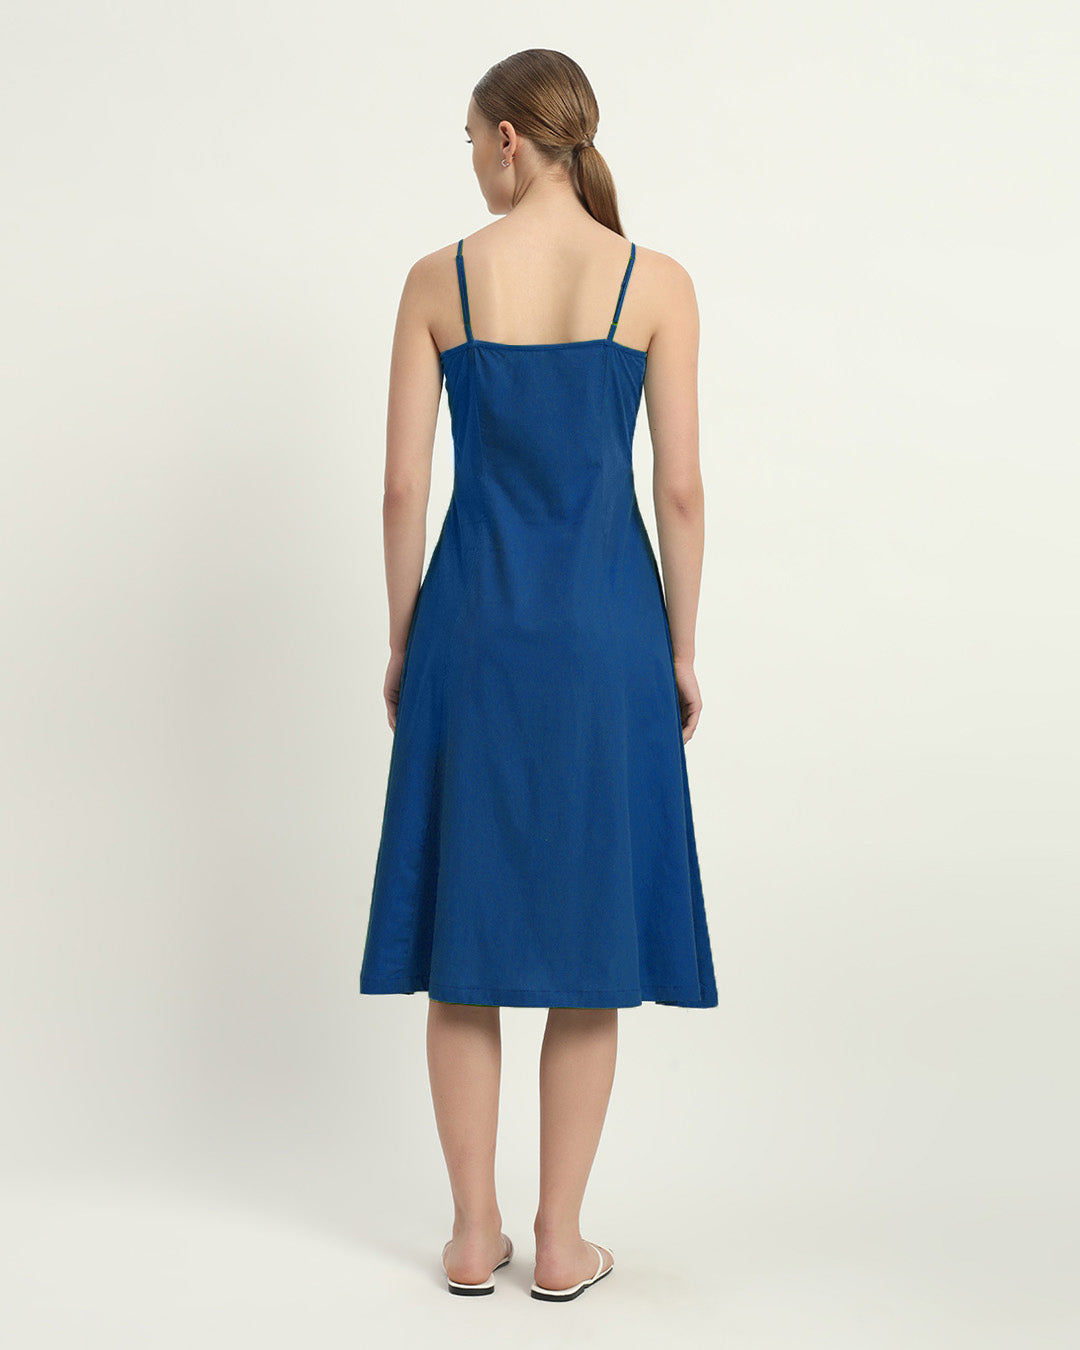 The Cobalt Valatie Cotton Dress